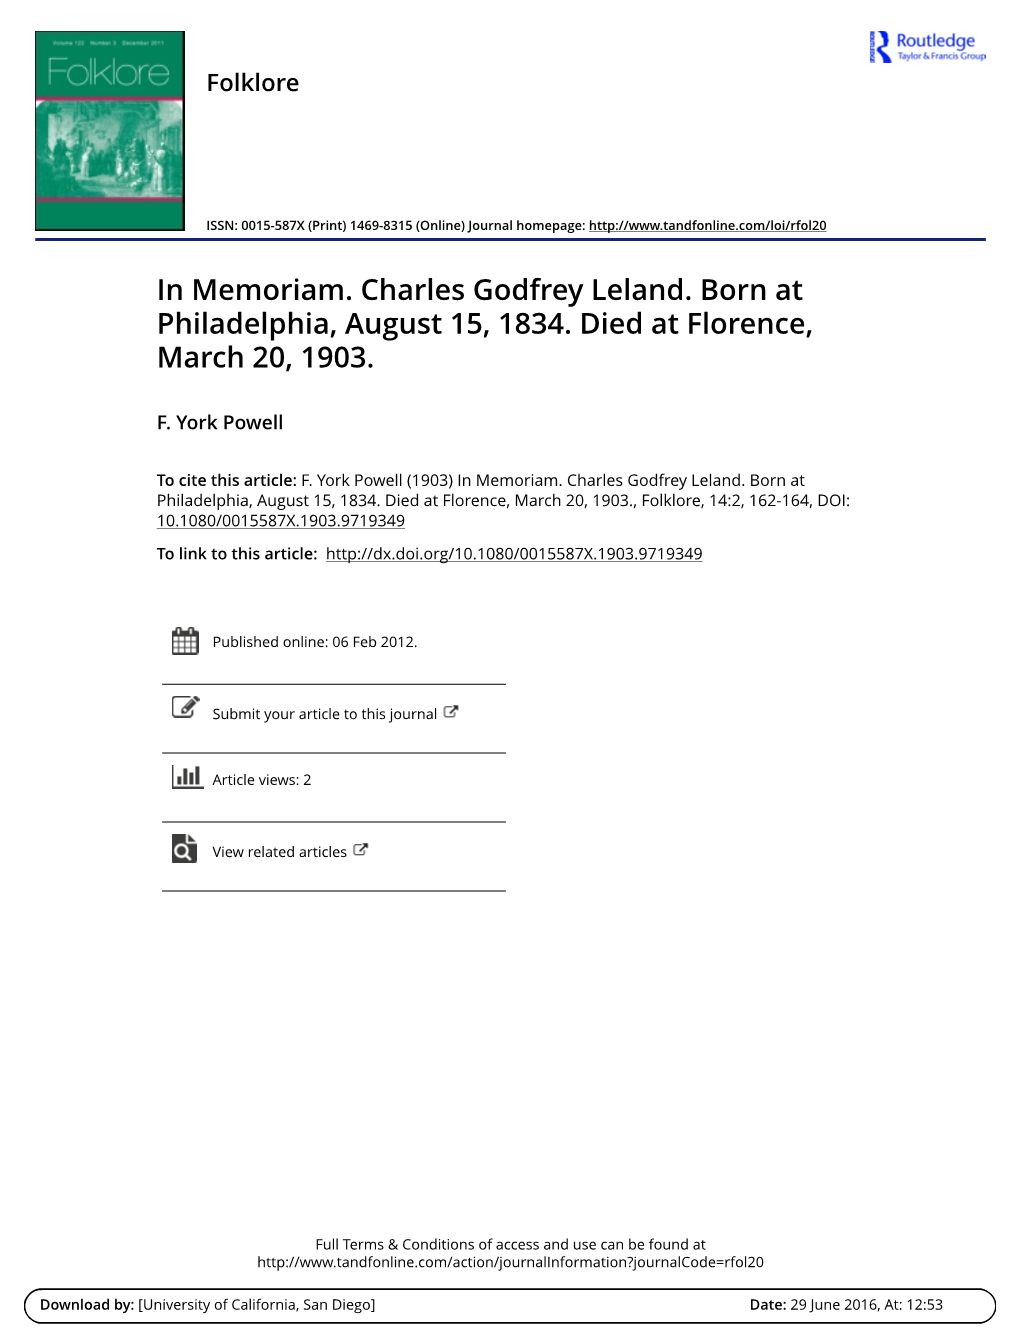 In Memoriam. Charles Godfrey Leland. Born at Philadelphia, August 15, 1834